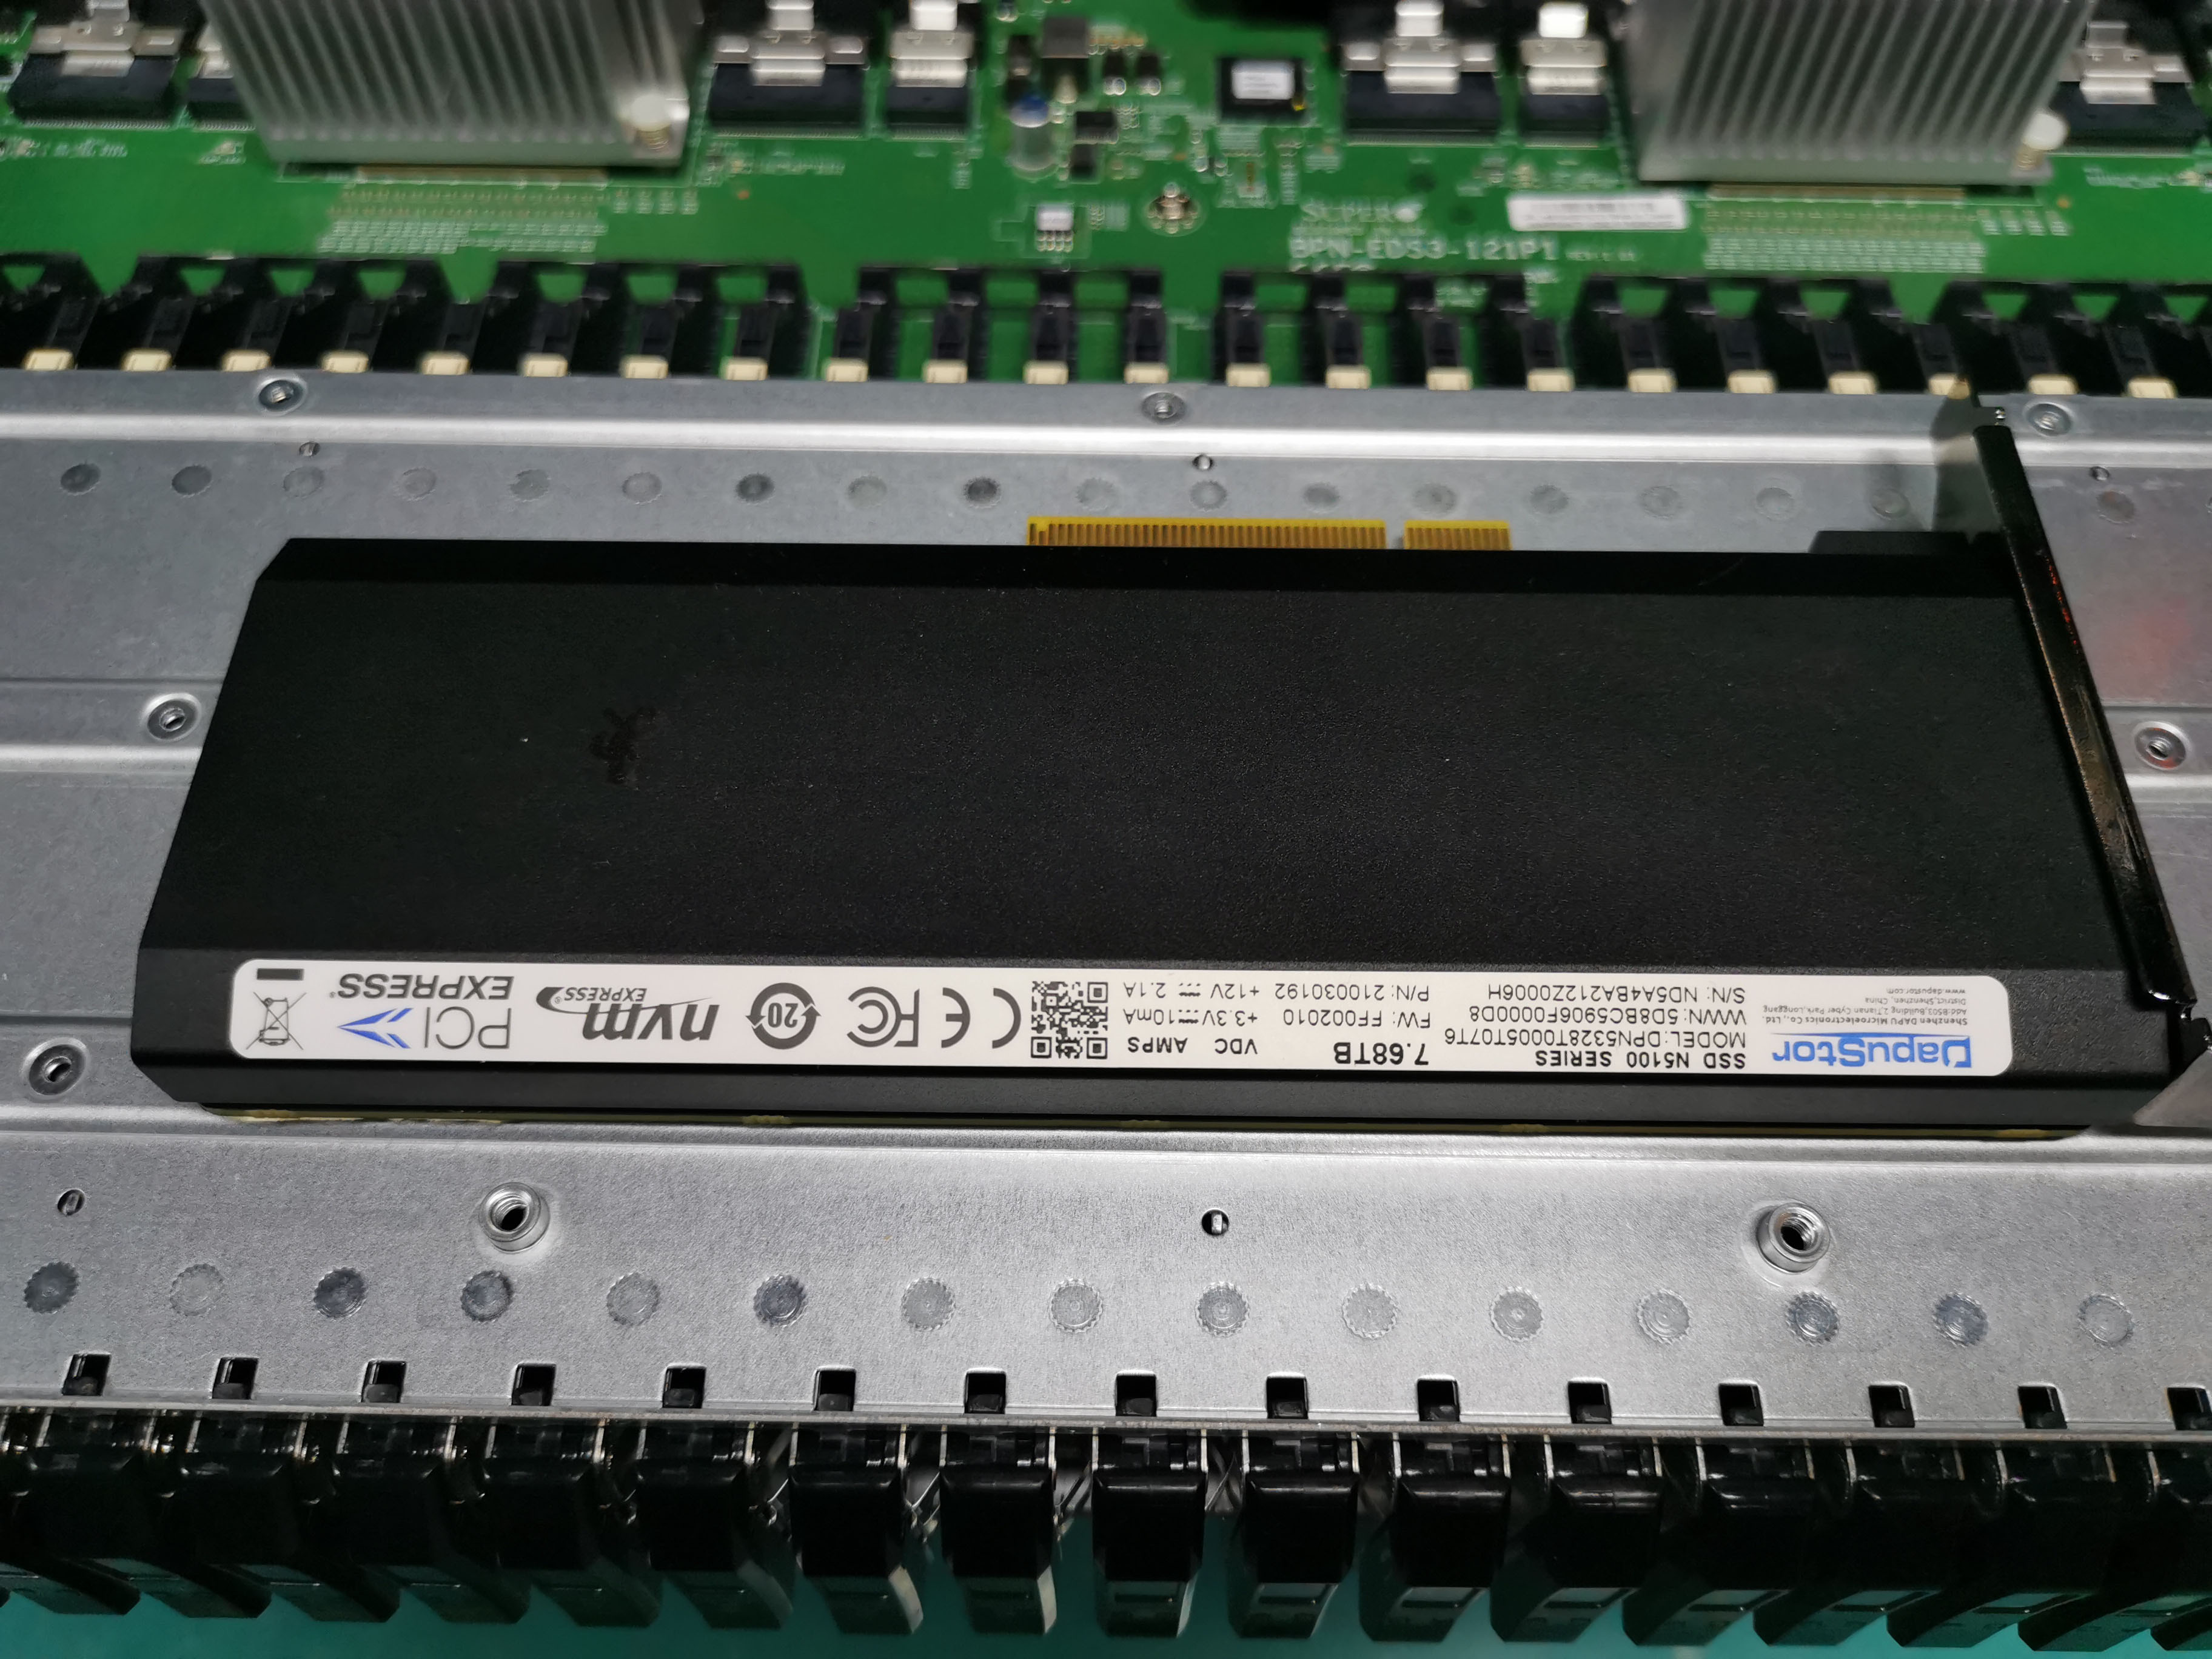 DapuStor发布国产企业级PCIe4.0 DPU600芯片及NVMe Nida5固态硬盘